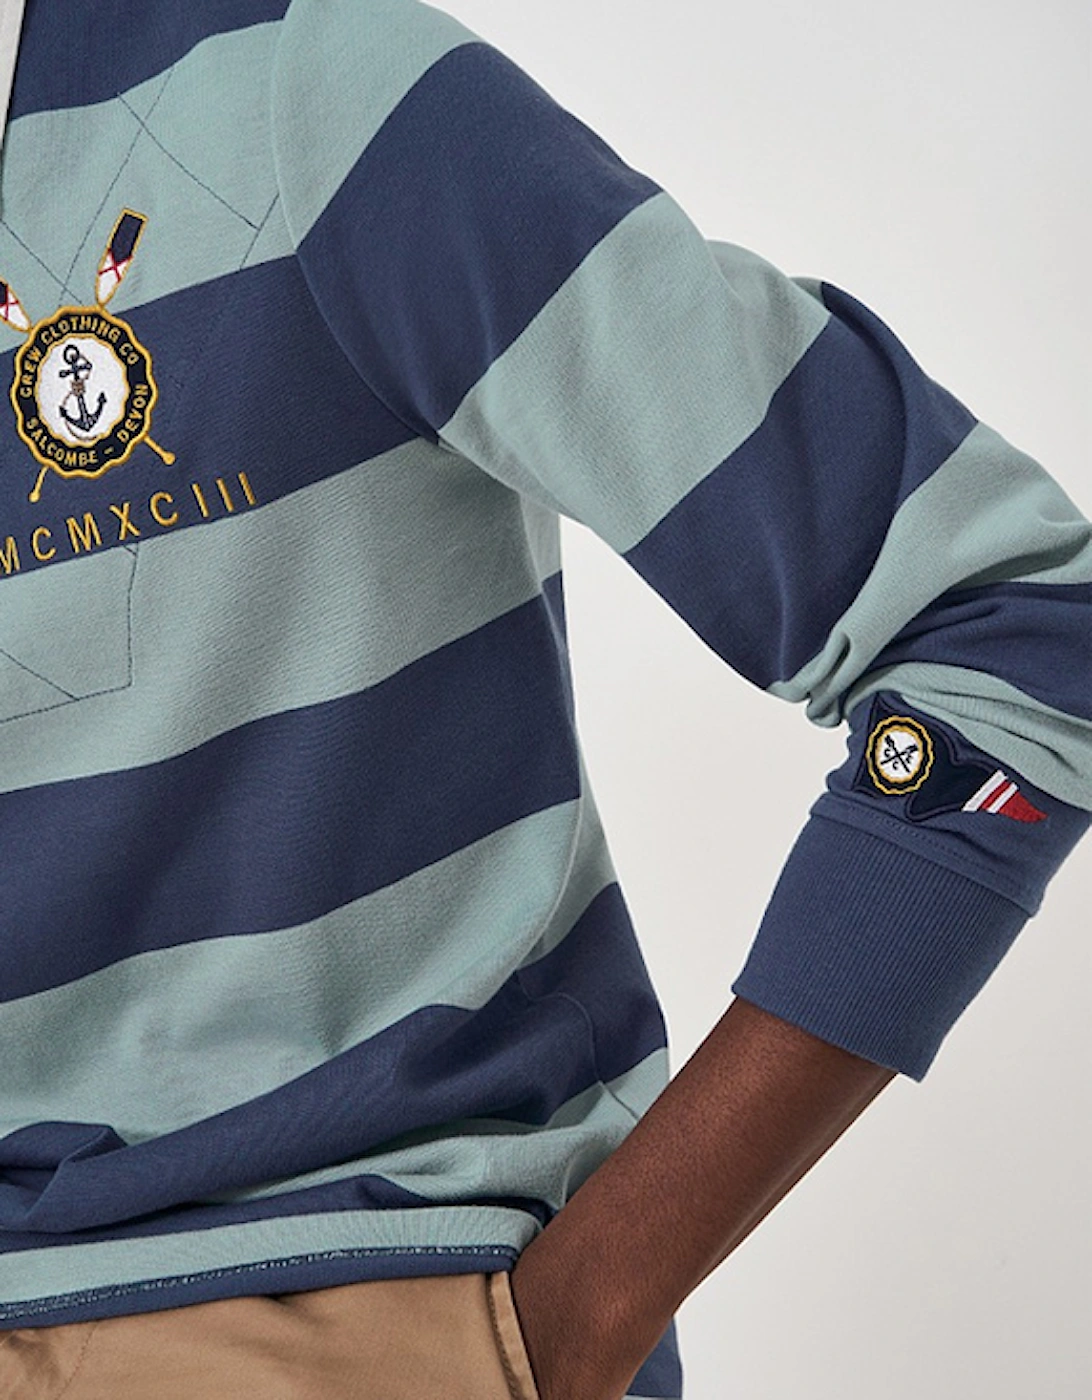 Men's Callington Rugby Shirt Blue/Grey